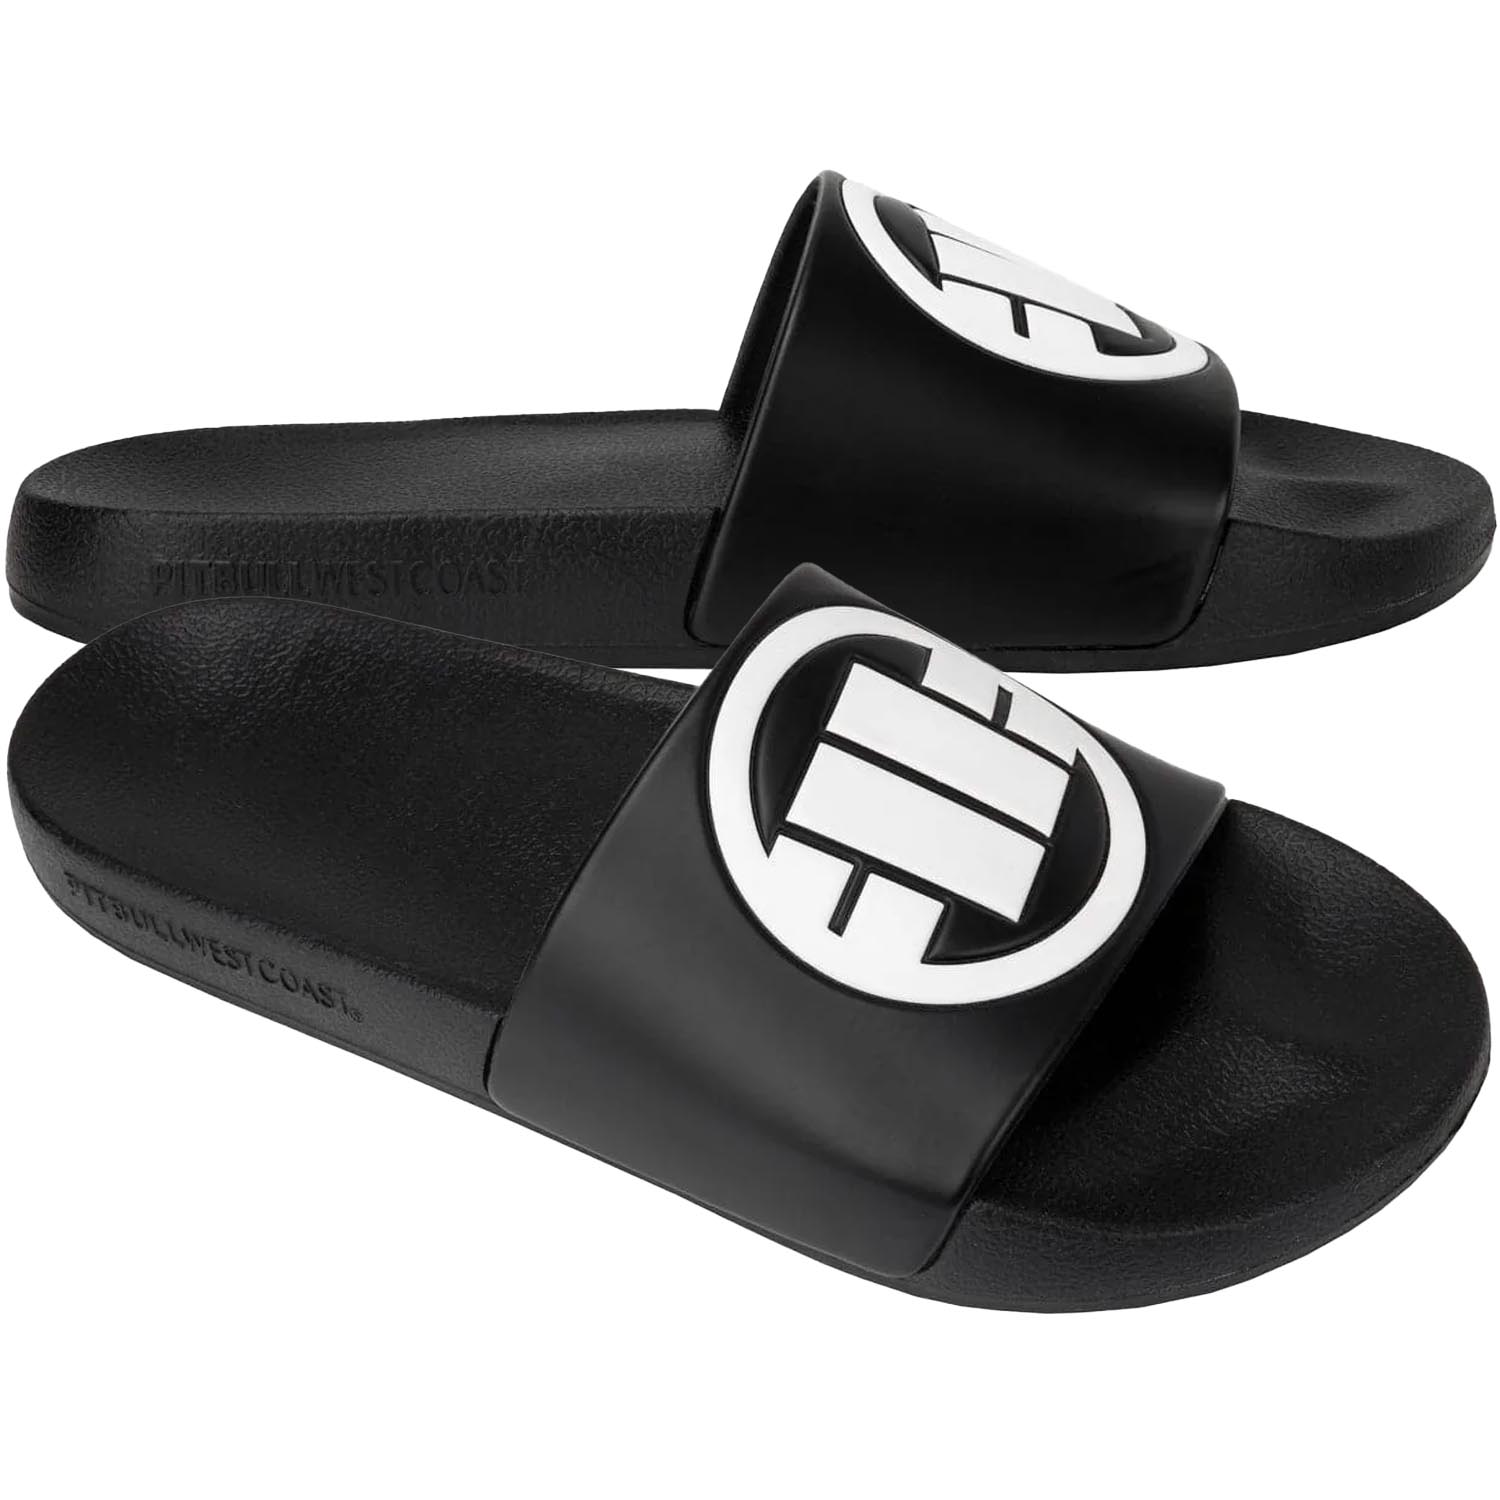 Pit Bull West Coast, Flip Flops, New Logo, black-white